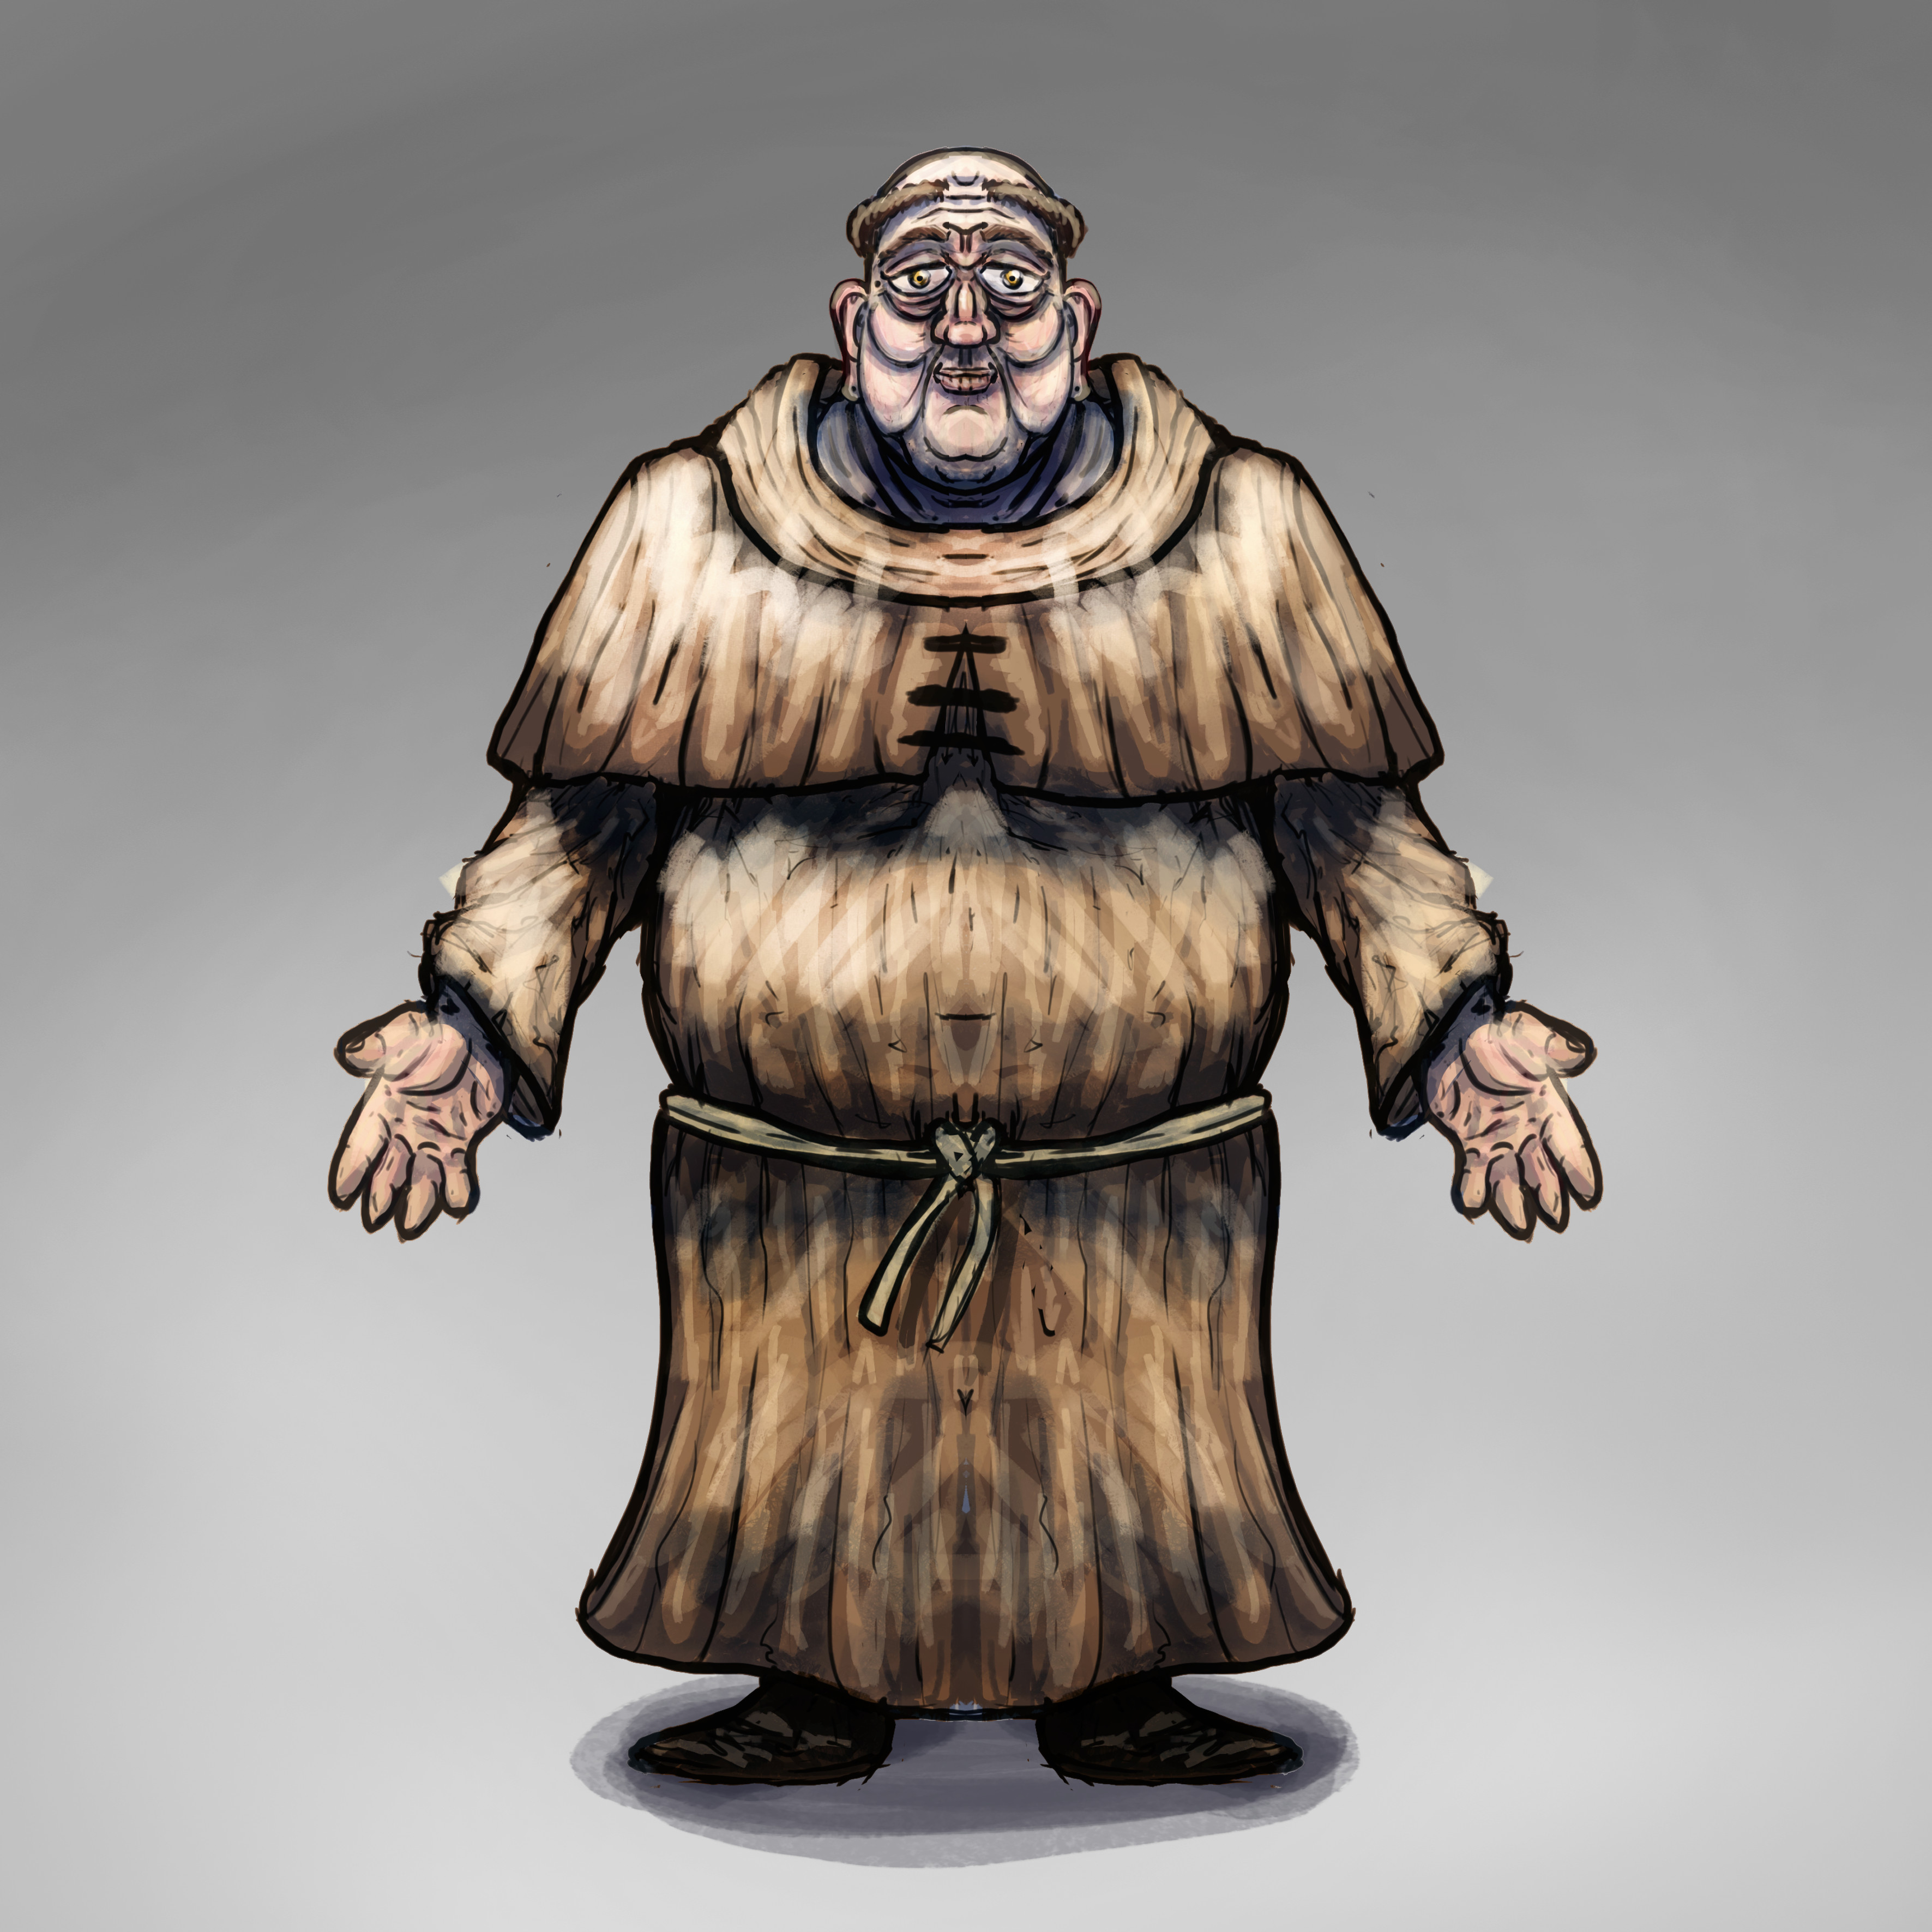 Character Design for a monk NPC.